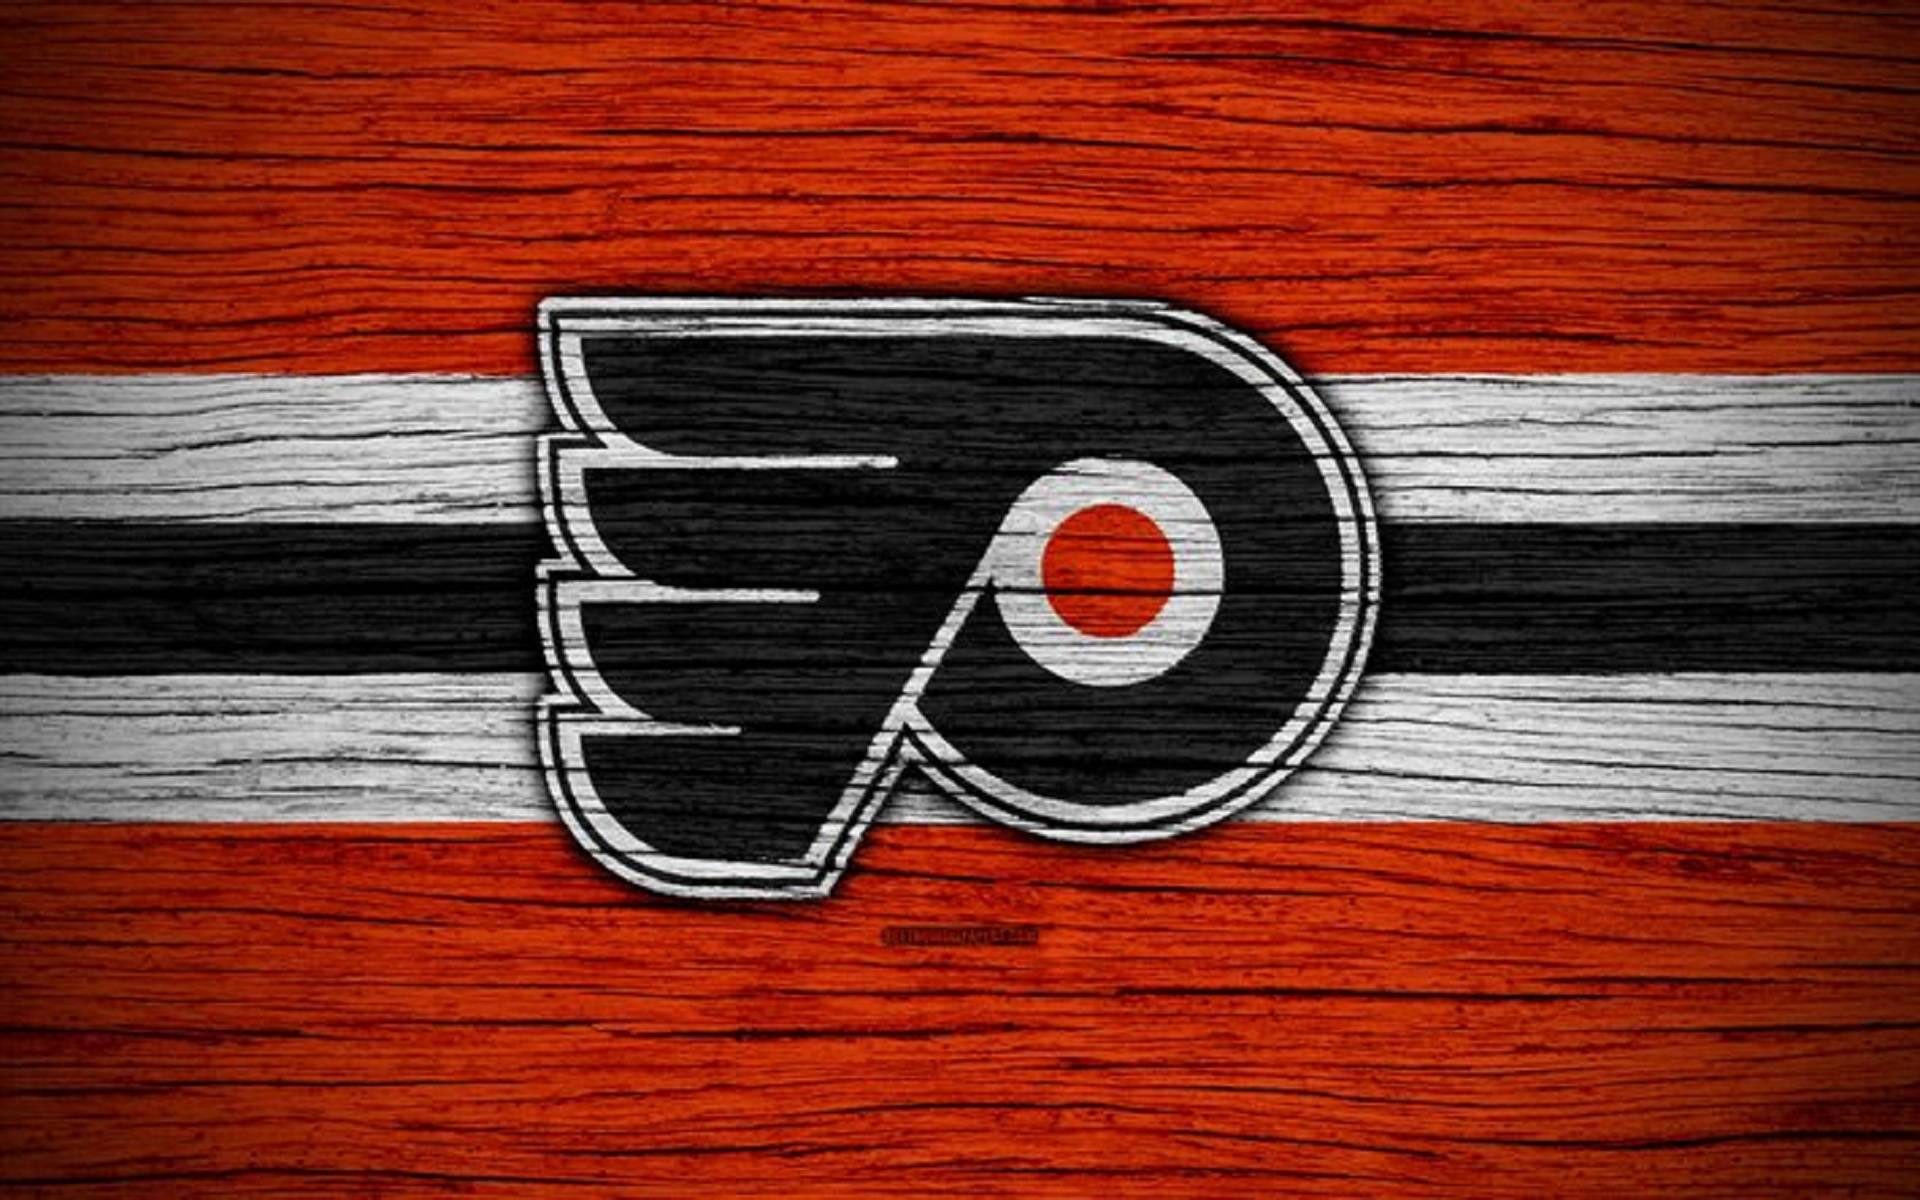 Philadelphia Flyers Logo On Red Wood